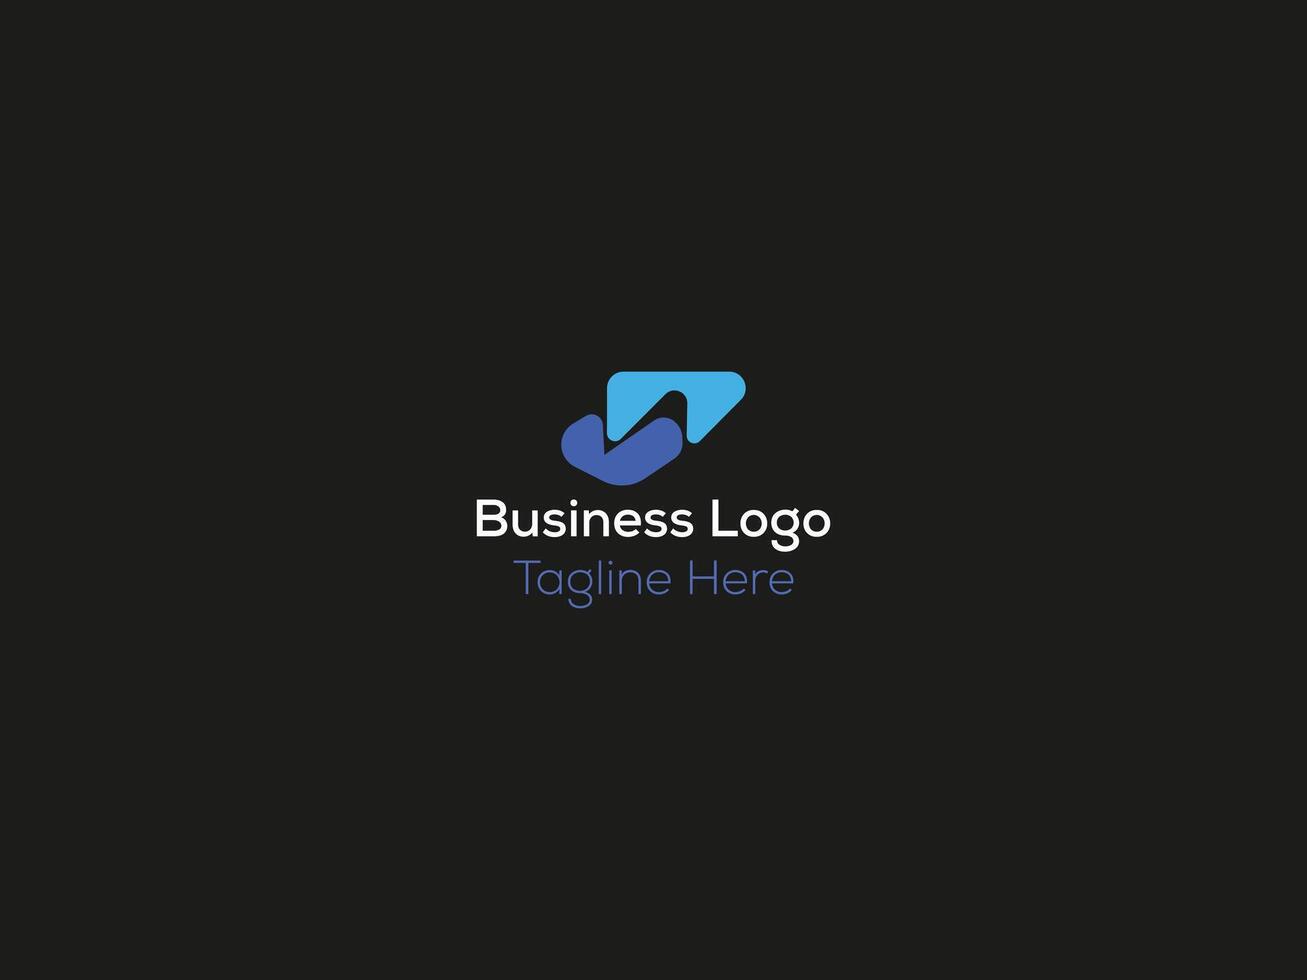 minimal logo design vector